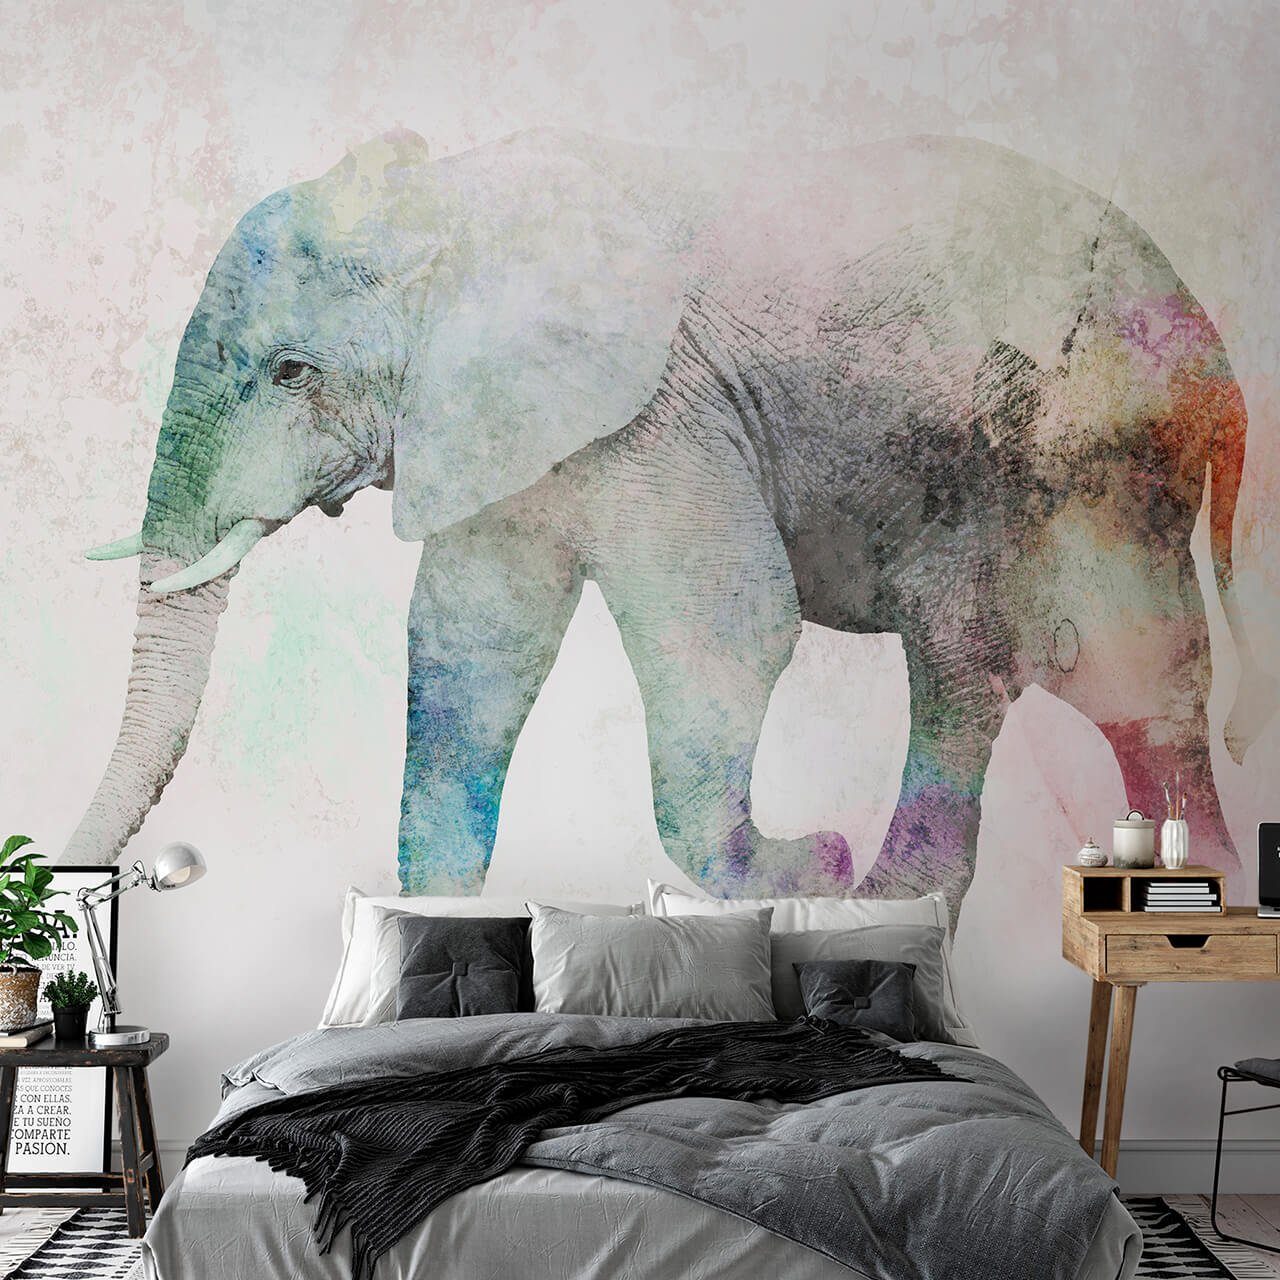 KUNSTLOFT Vliestapete Painted Elephant 0.98x0.7 m, matt, lichtbeständige Design Tapete